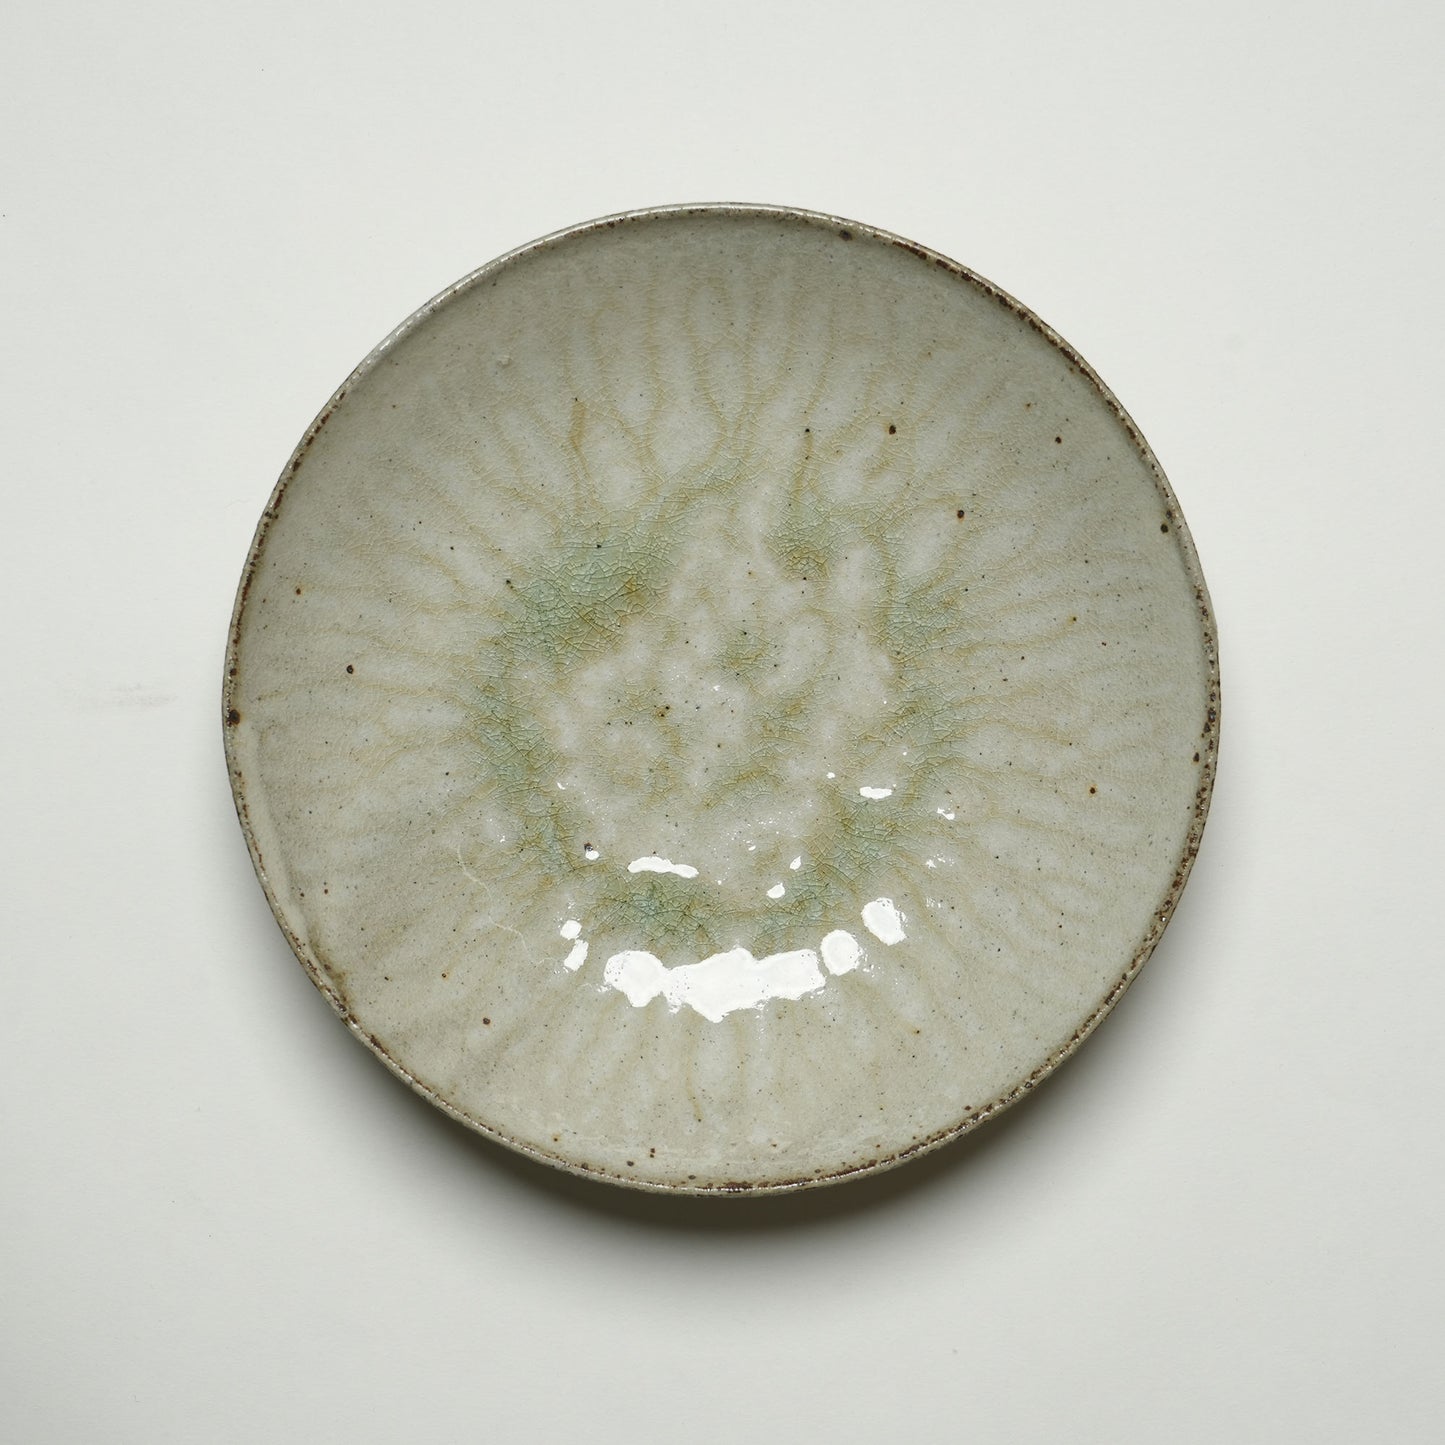 Shinogo Umano Japanese pottery